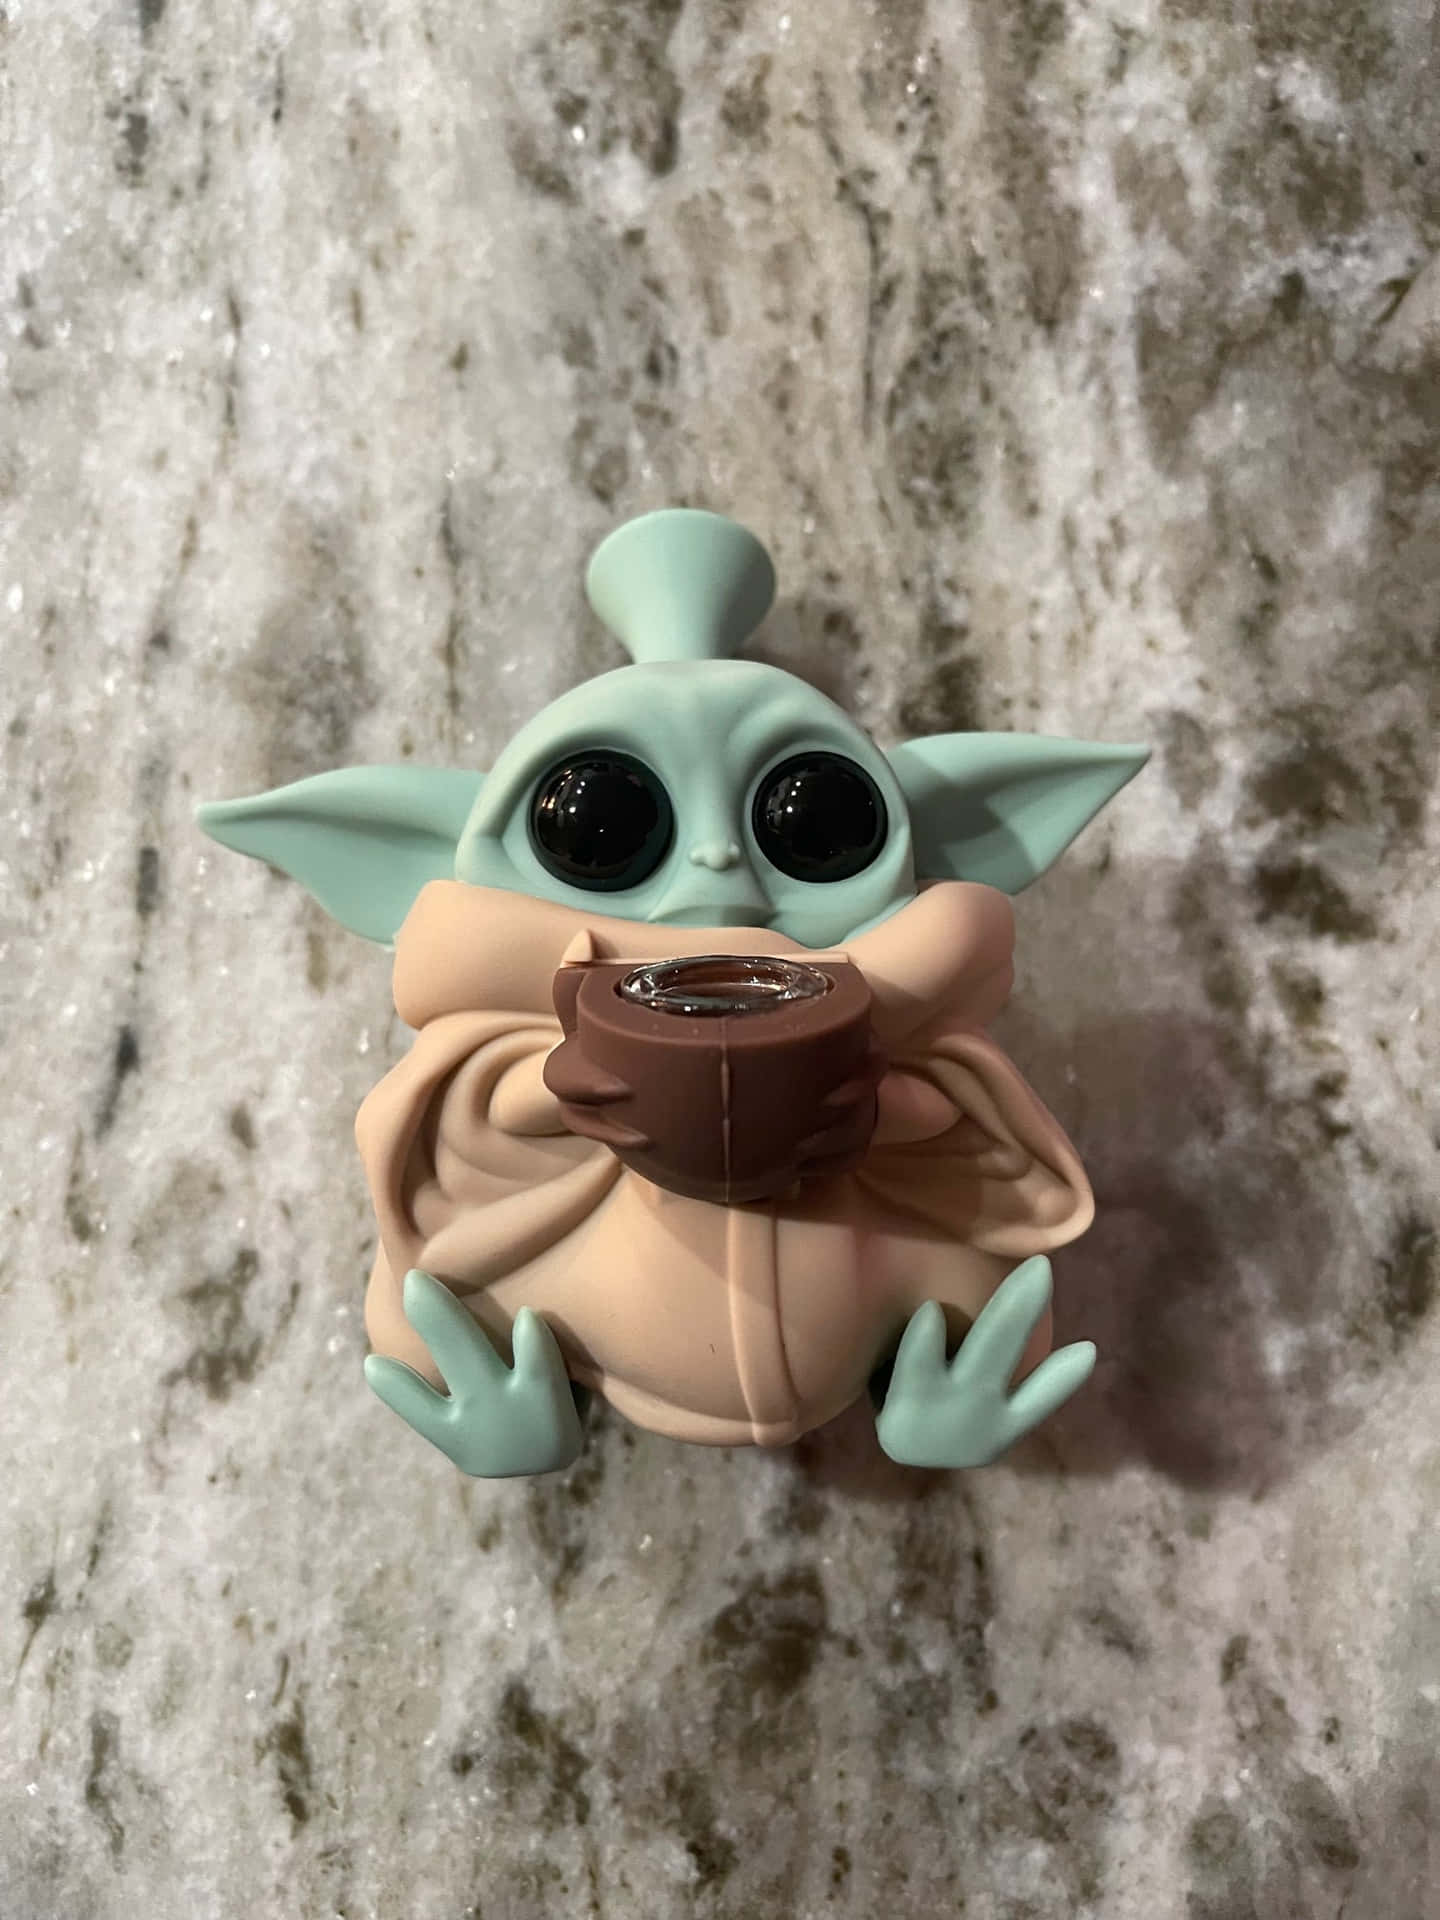 A baby yoda figurine is sitting on top of some rocks - Baby Yoda